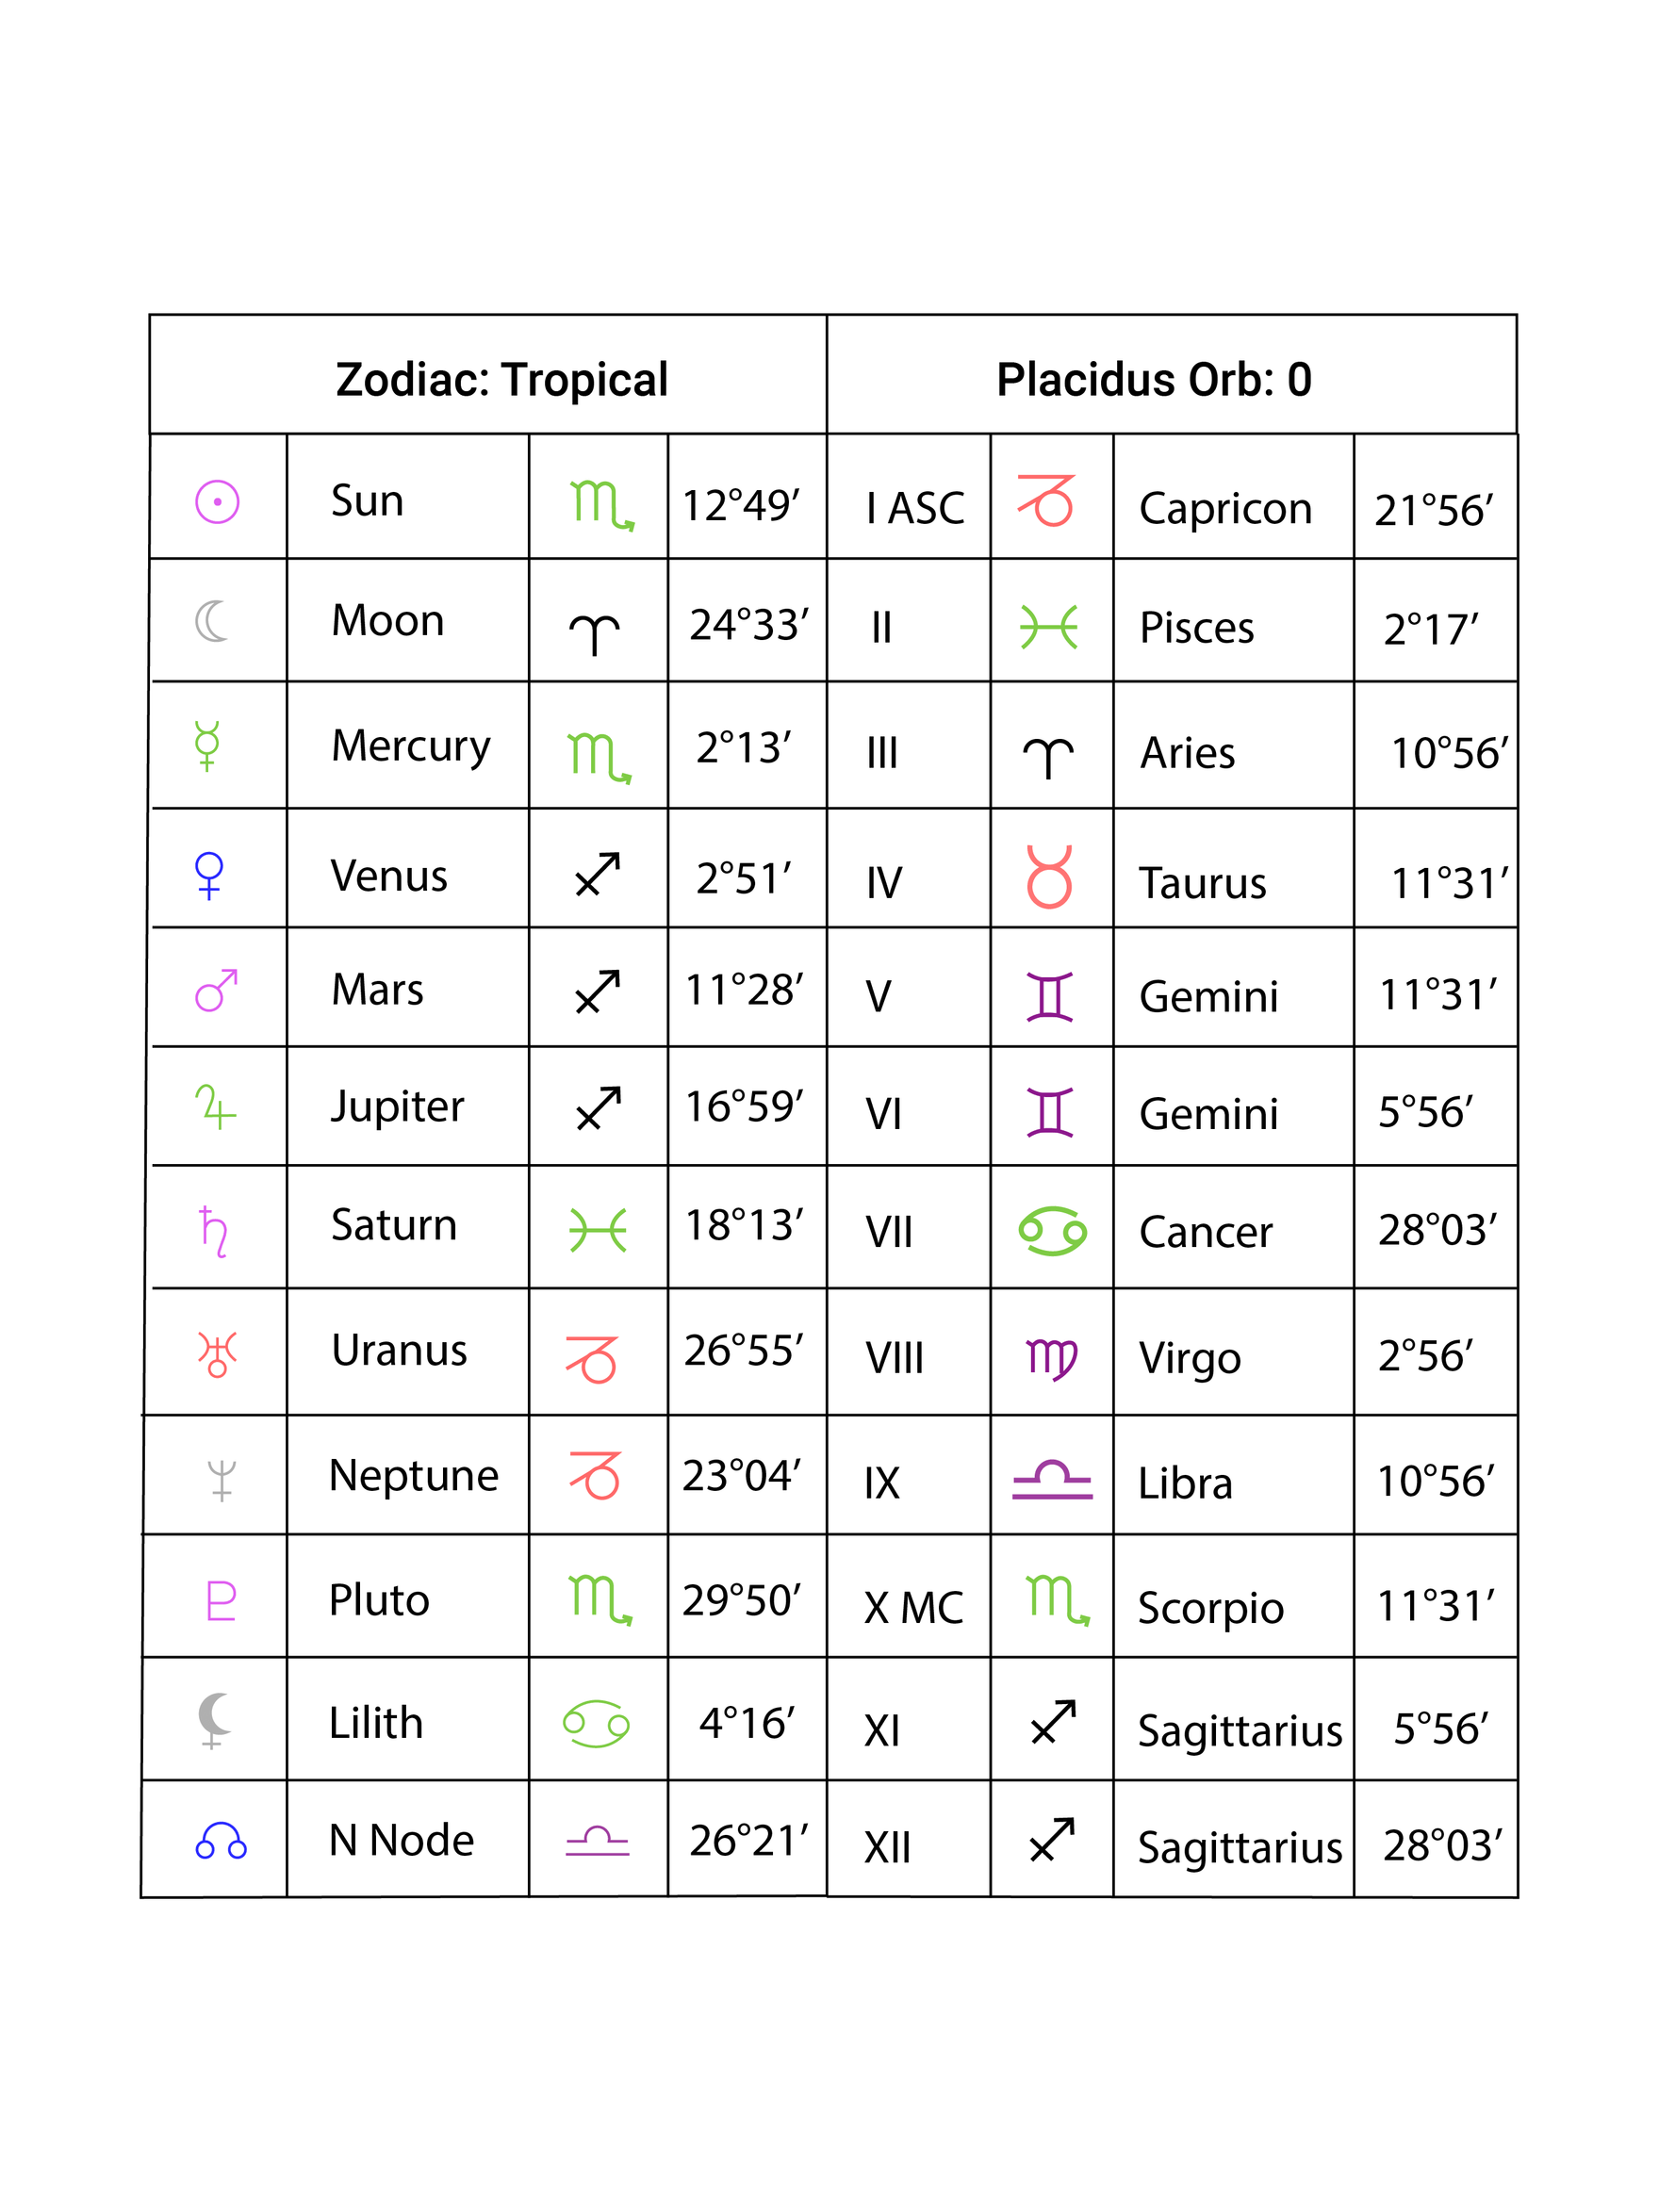 Astrology Birth Chart Reading 